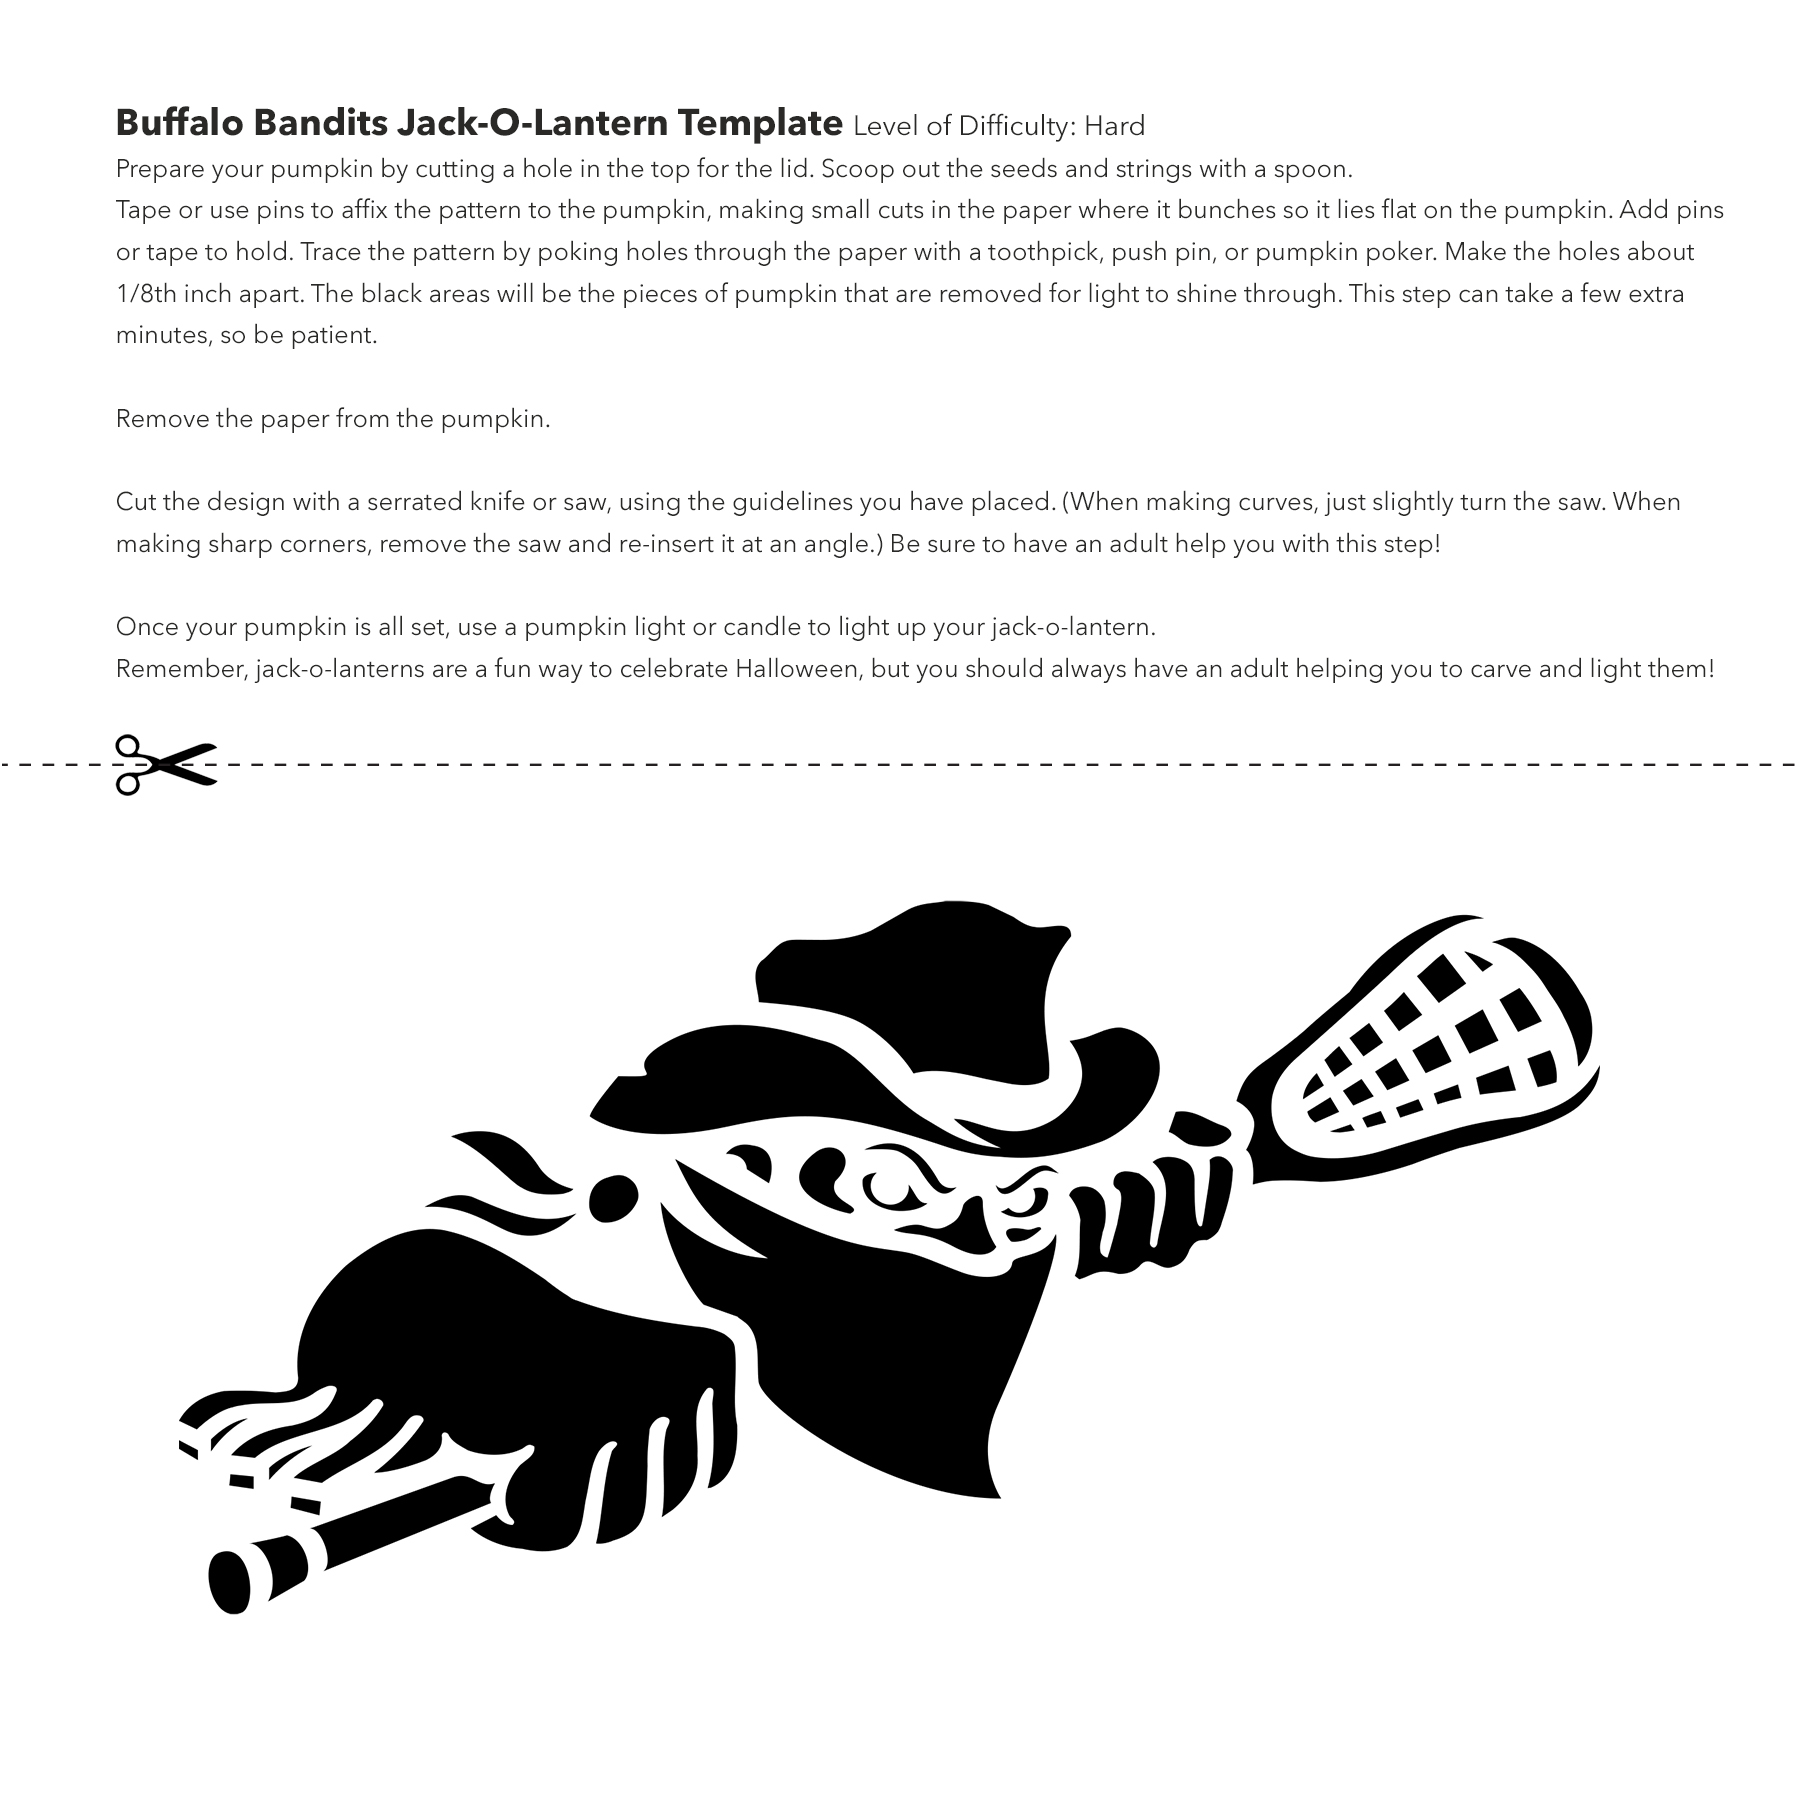 Buffalo Bandits Jack-O-Lantern